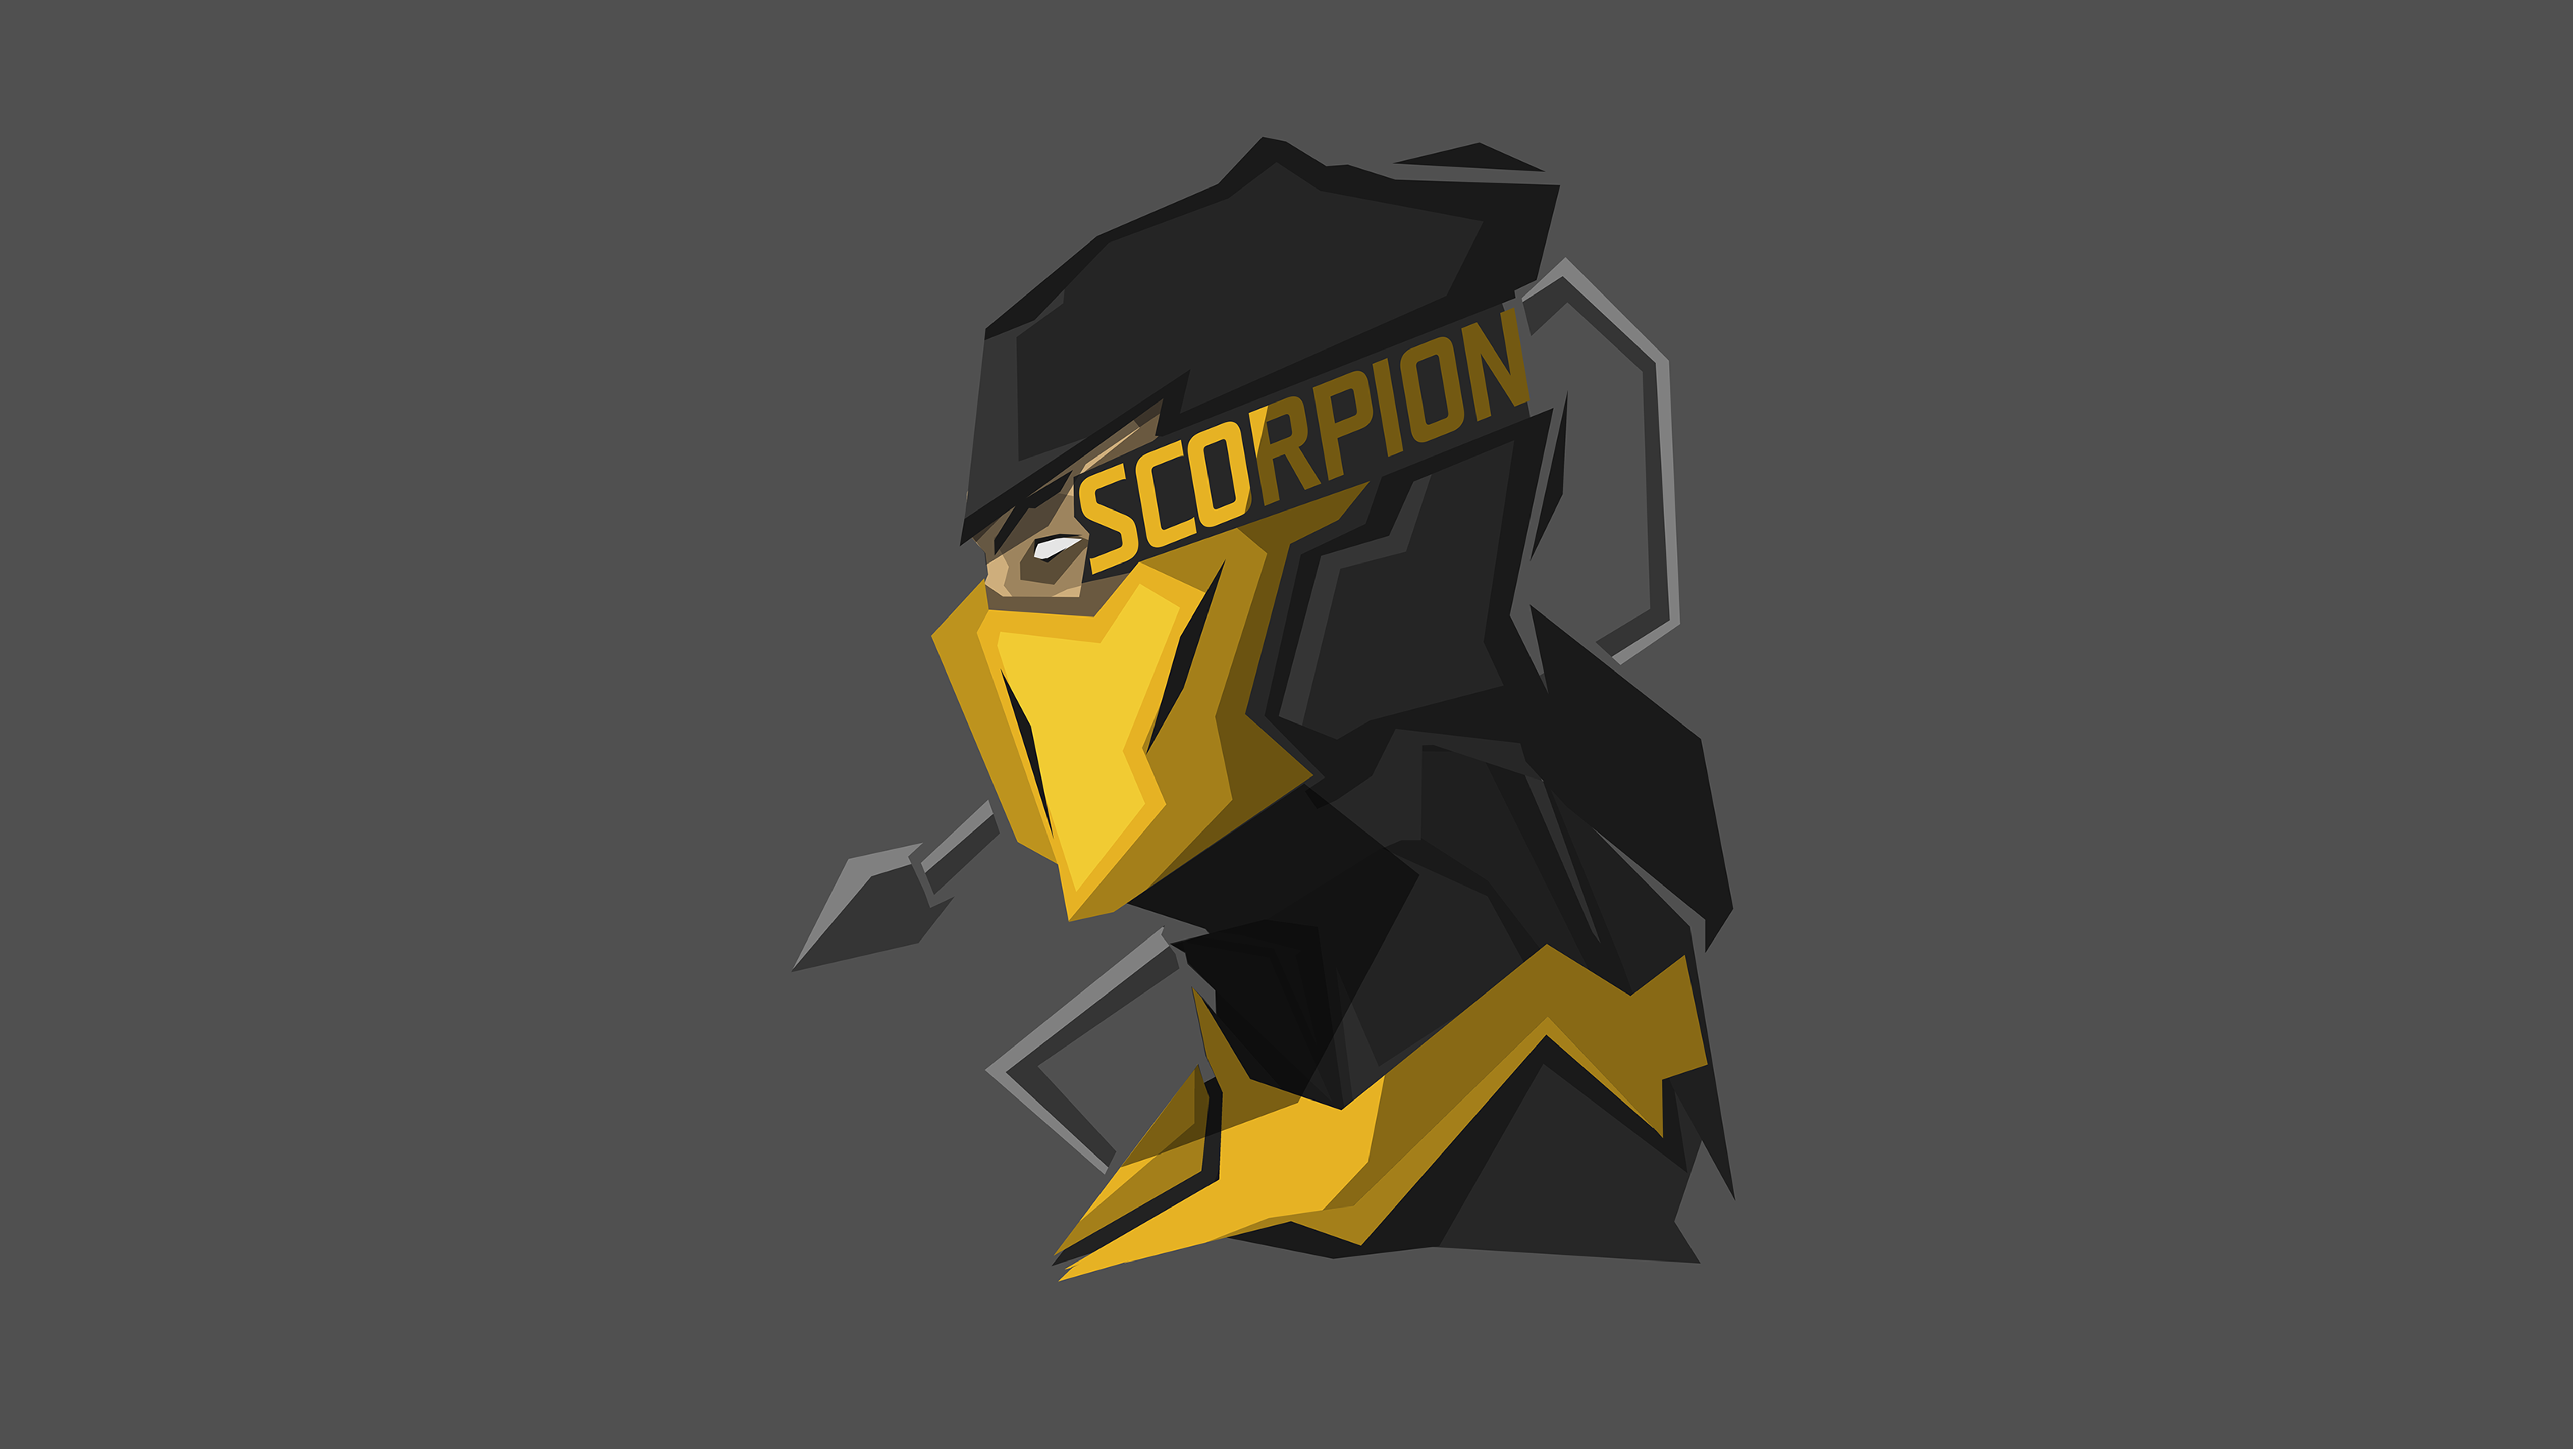 Scorpion by BossLogic